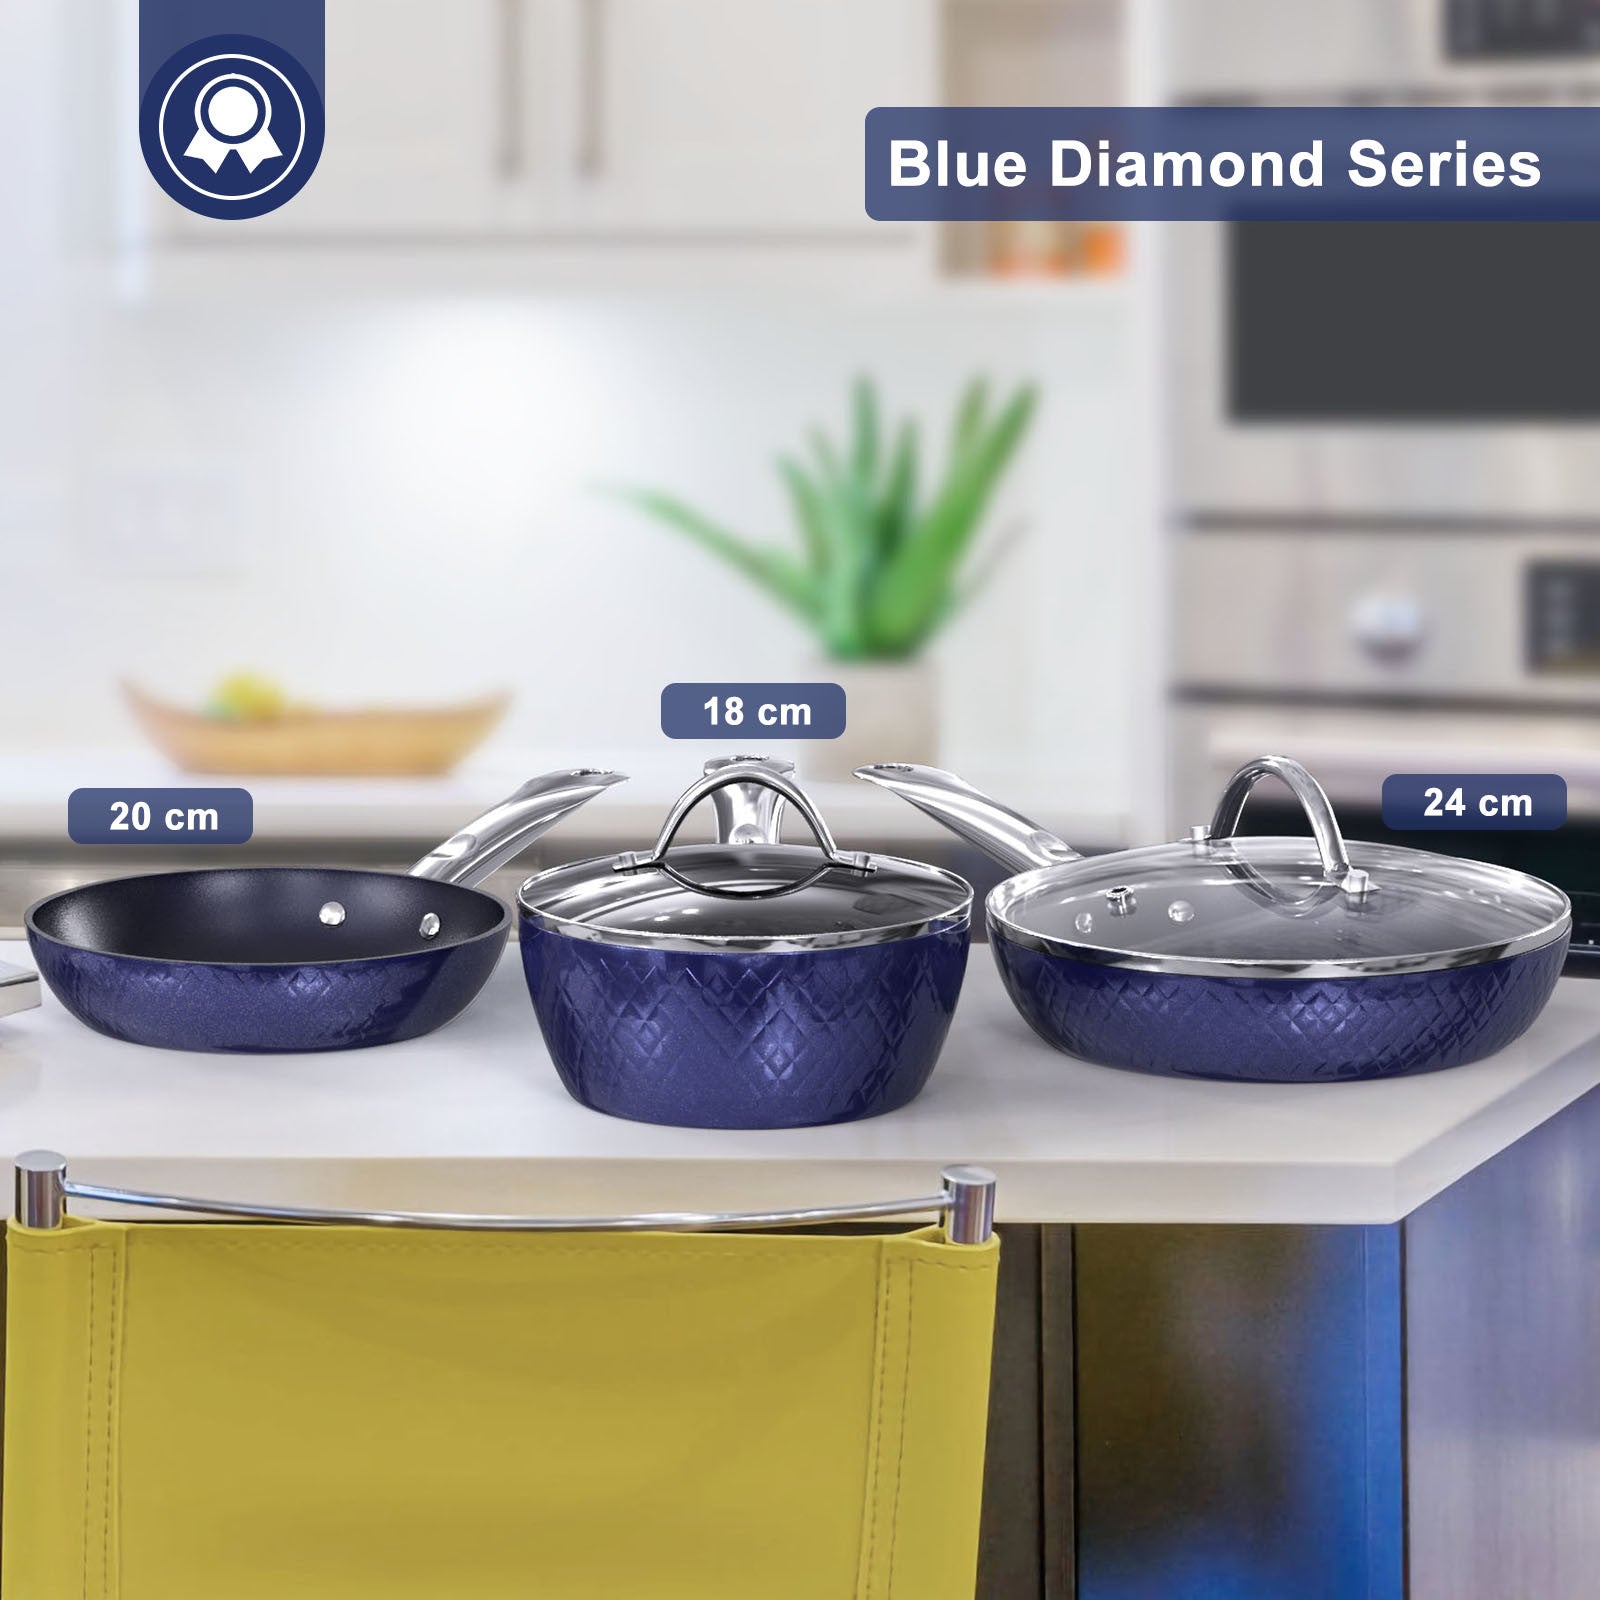 Frying Pan Sets Non Stick 3Pcs, Blue 3D Diamond Cookware, 20/24cm Frying Pan, 18cm Saucepan - Pots and Pans Set, Aluminum Ceramic Coating - Suitable for Induction Hob Oven RT